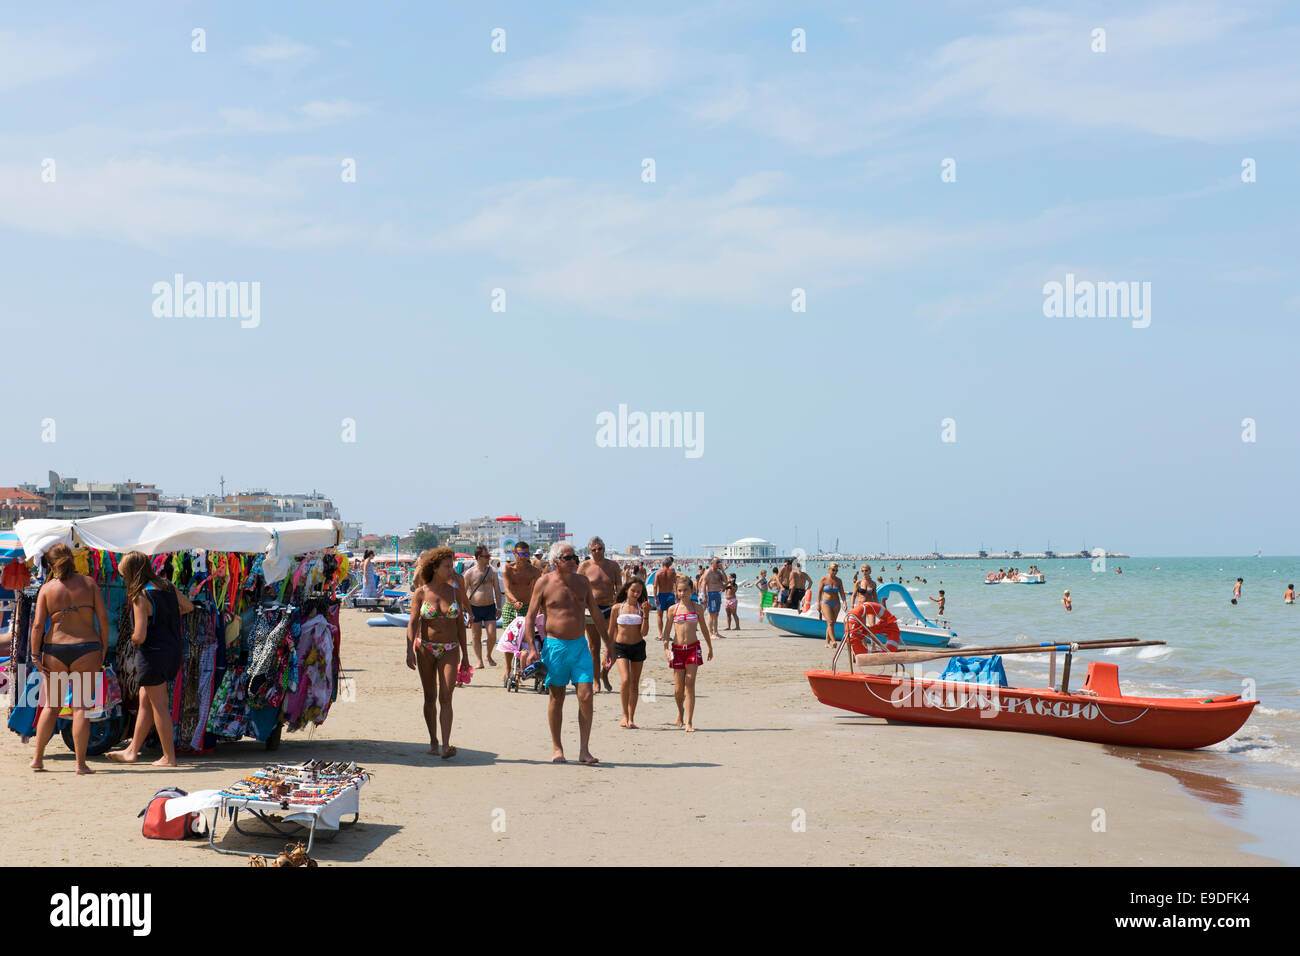 Beach, People, Shop, Market, Adreatic Sea, Senigallia, Ancona, Marken, Italy, Stock Photo